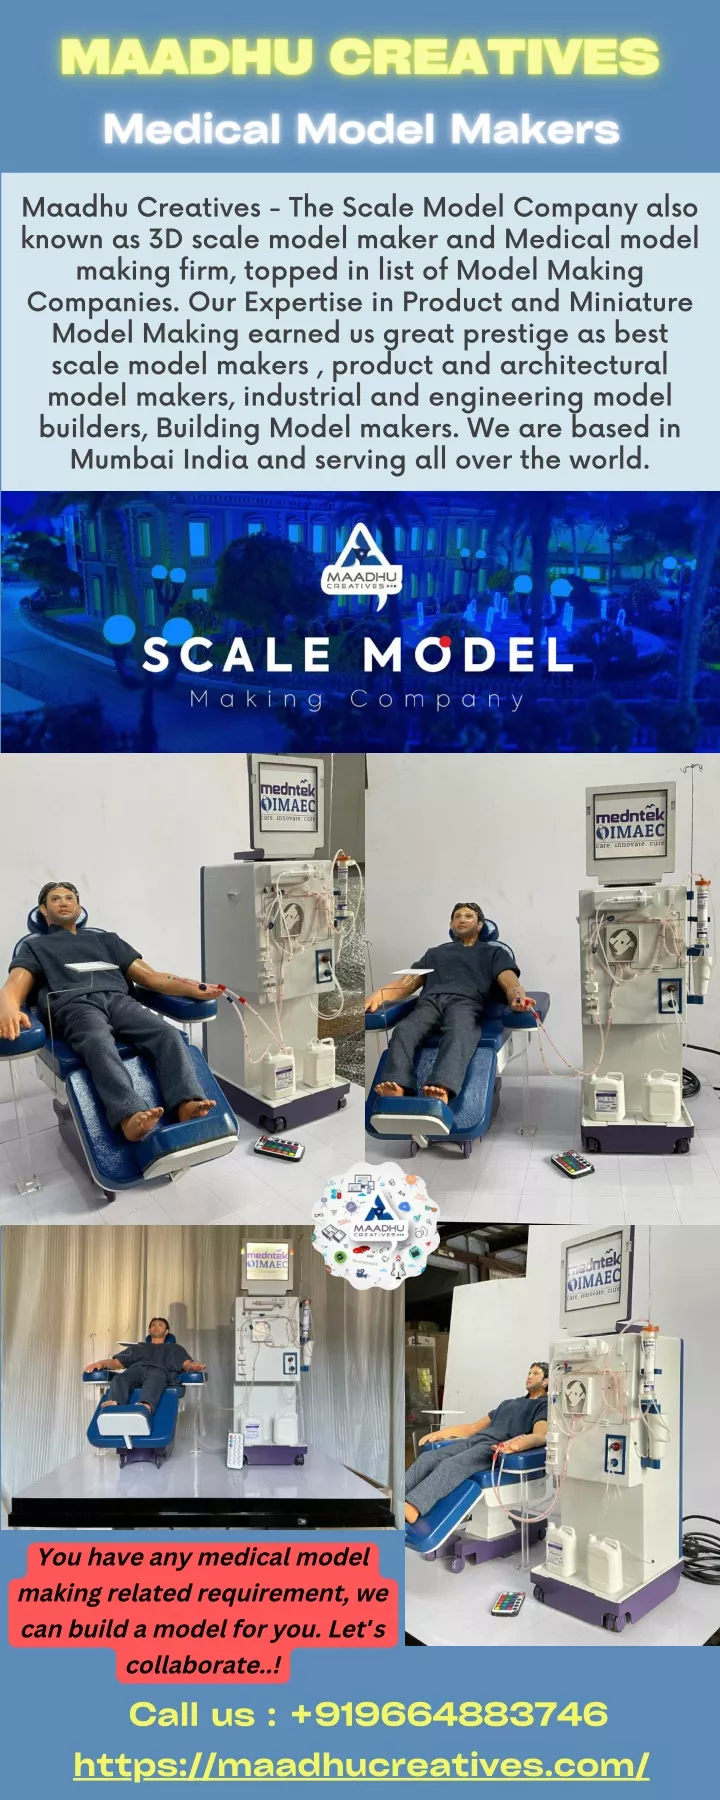 maadhu creatives the scale model company also